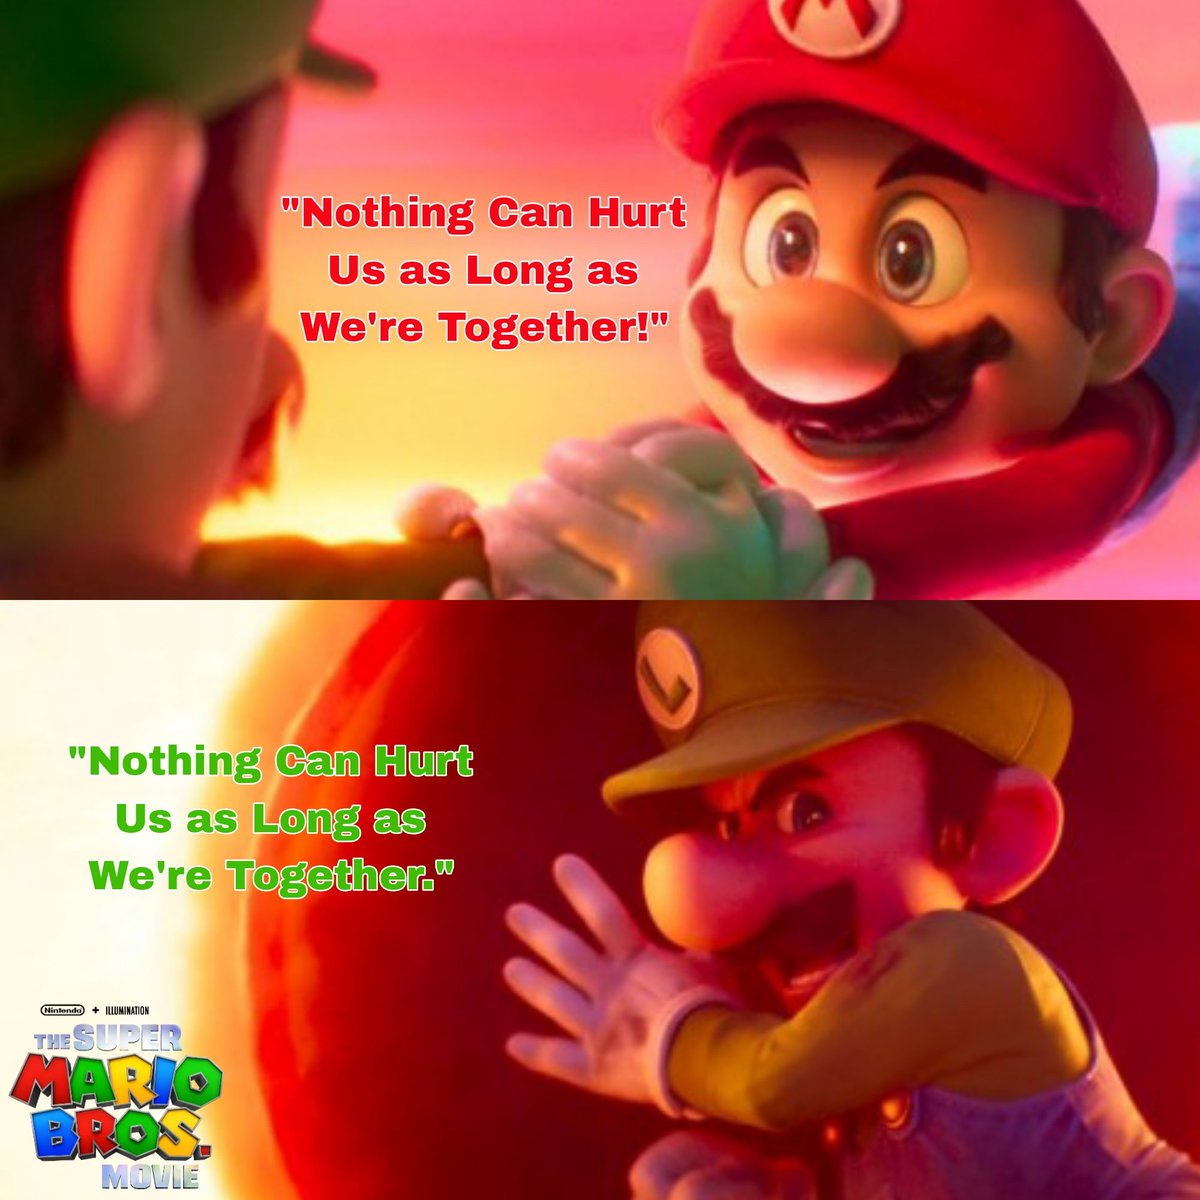 ❤️'Nothing Can Hurt Us as Long as We're Together' Parallel💚

🌟Then & Now🕛

#Mario #Luigi #SuperMarioBrosMovie #SuperMario 
#Nintendo #illumination #Parallel #Comparison #Edit